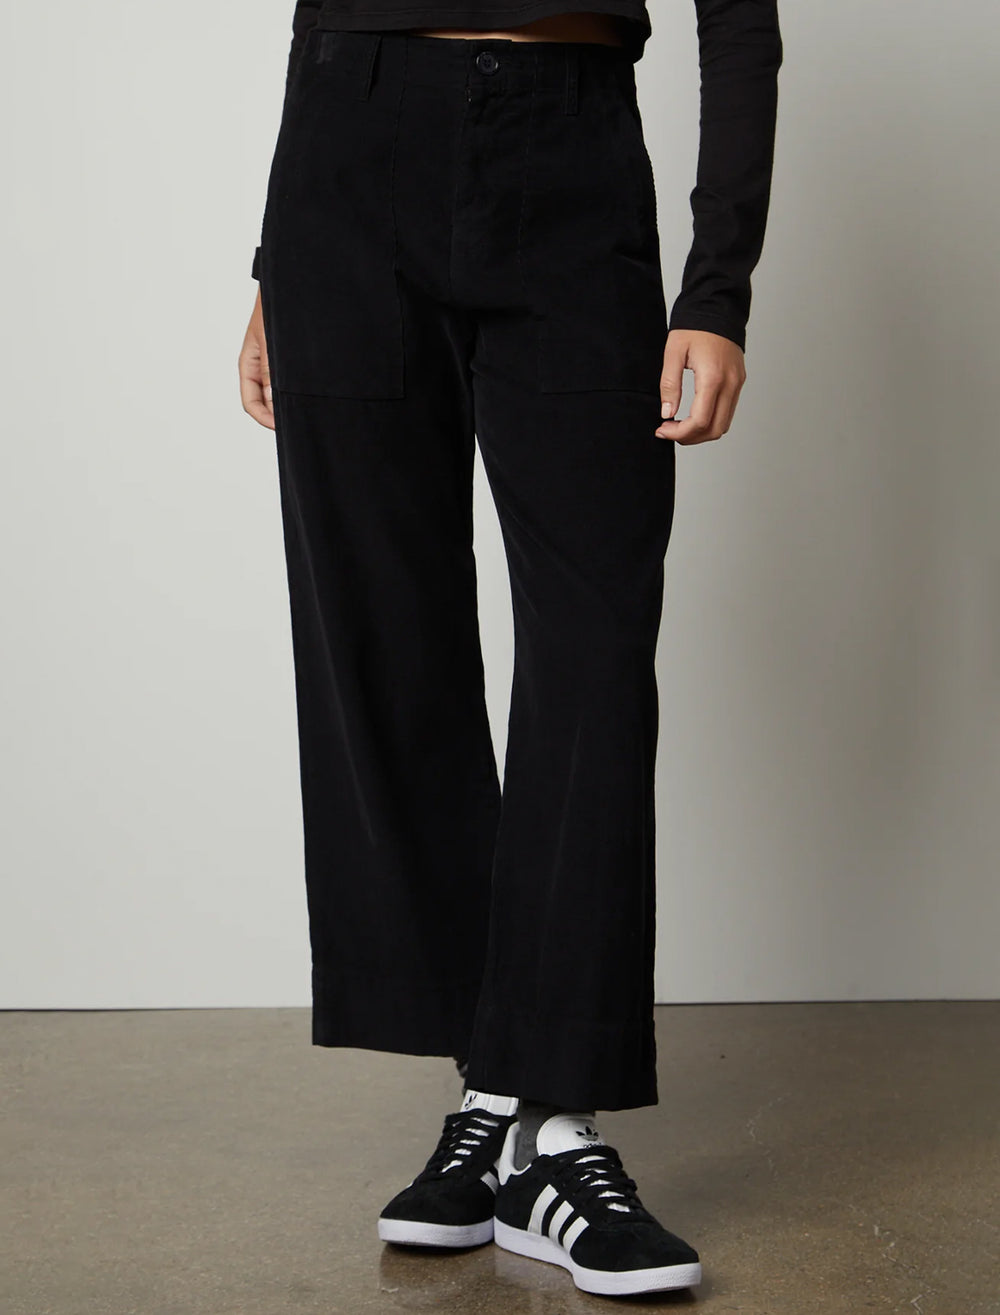 Model wearing Velvet's vera pant in black cord.